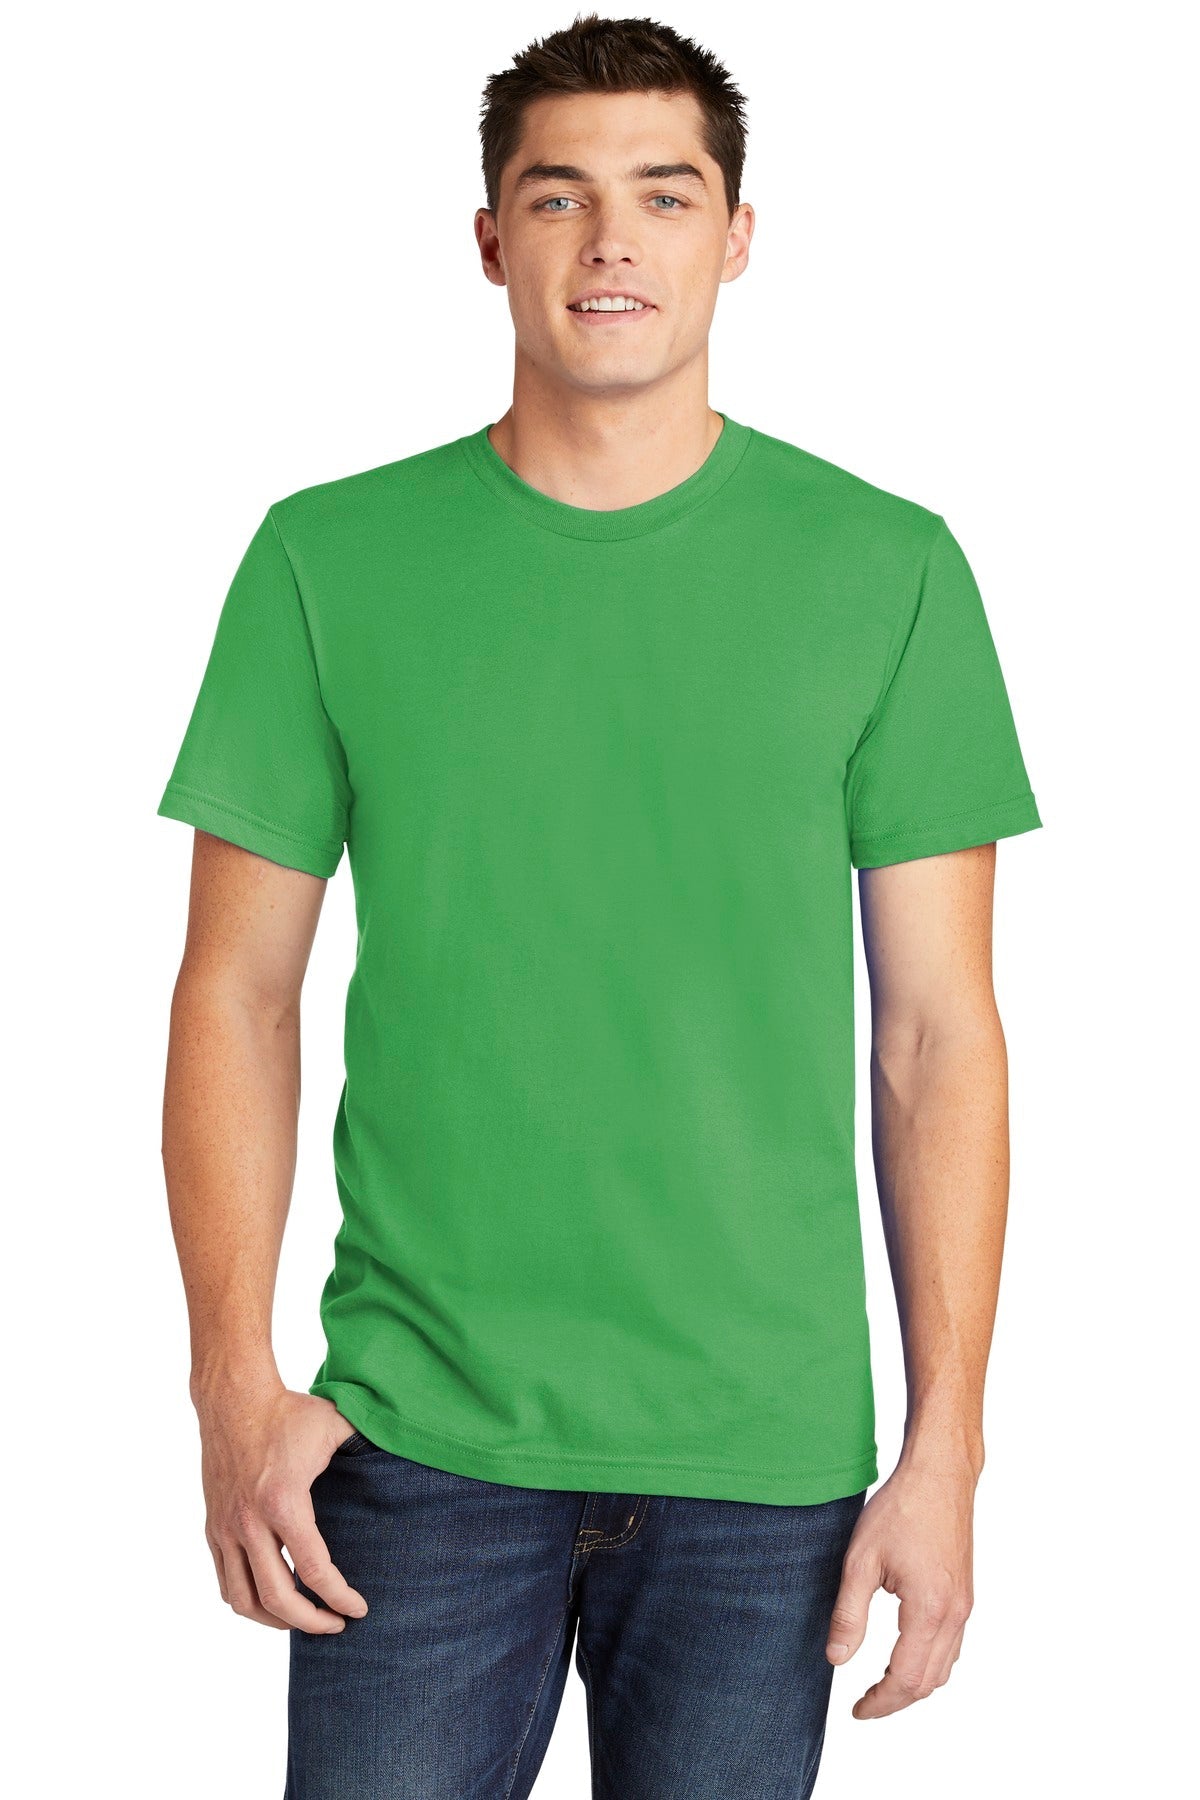 American Apparel ® Fine Jersey T-Shirt. 2001W [Grass] - DFW Impression